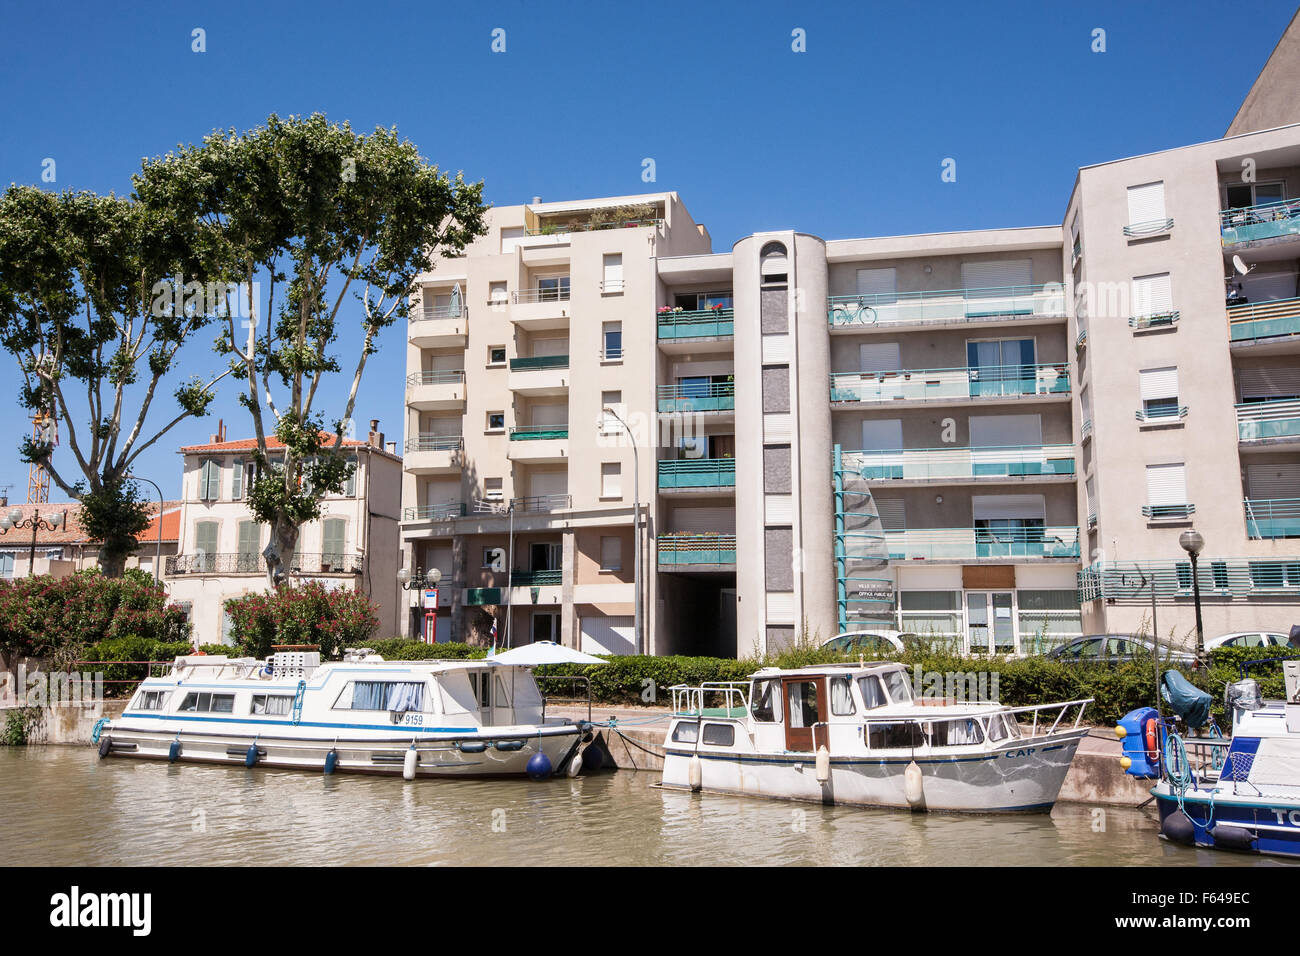 Mehrfamilienhäuser in Narbonne, Ufer des Canal De La Robine, Süden, Frankreich, Küste, Urlaub, Kanal, du, Midi, Sommer, Stockfoto